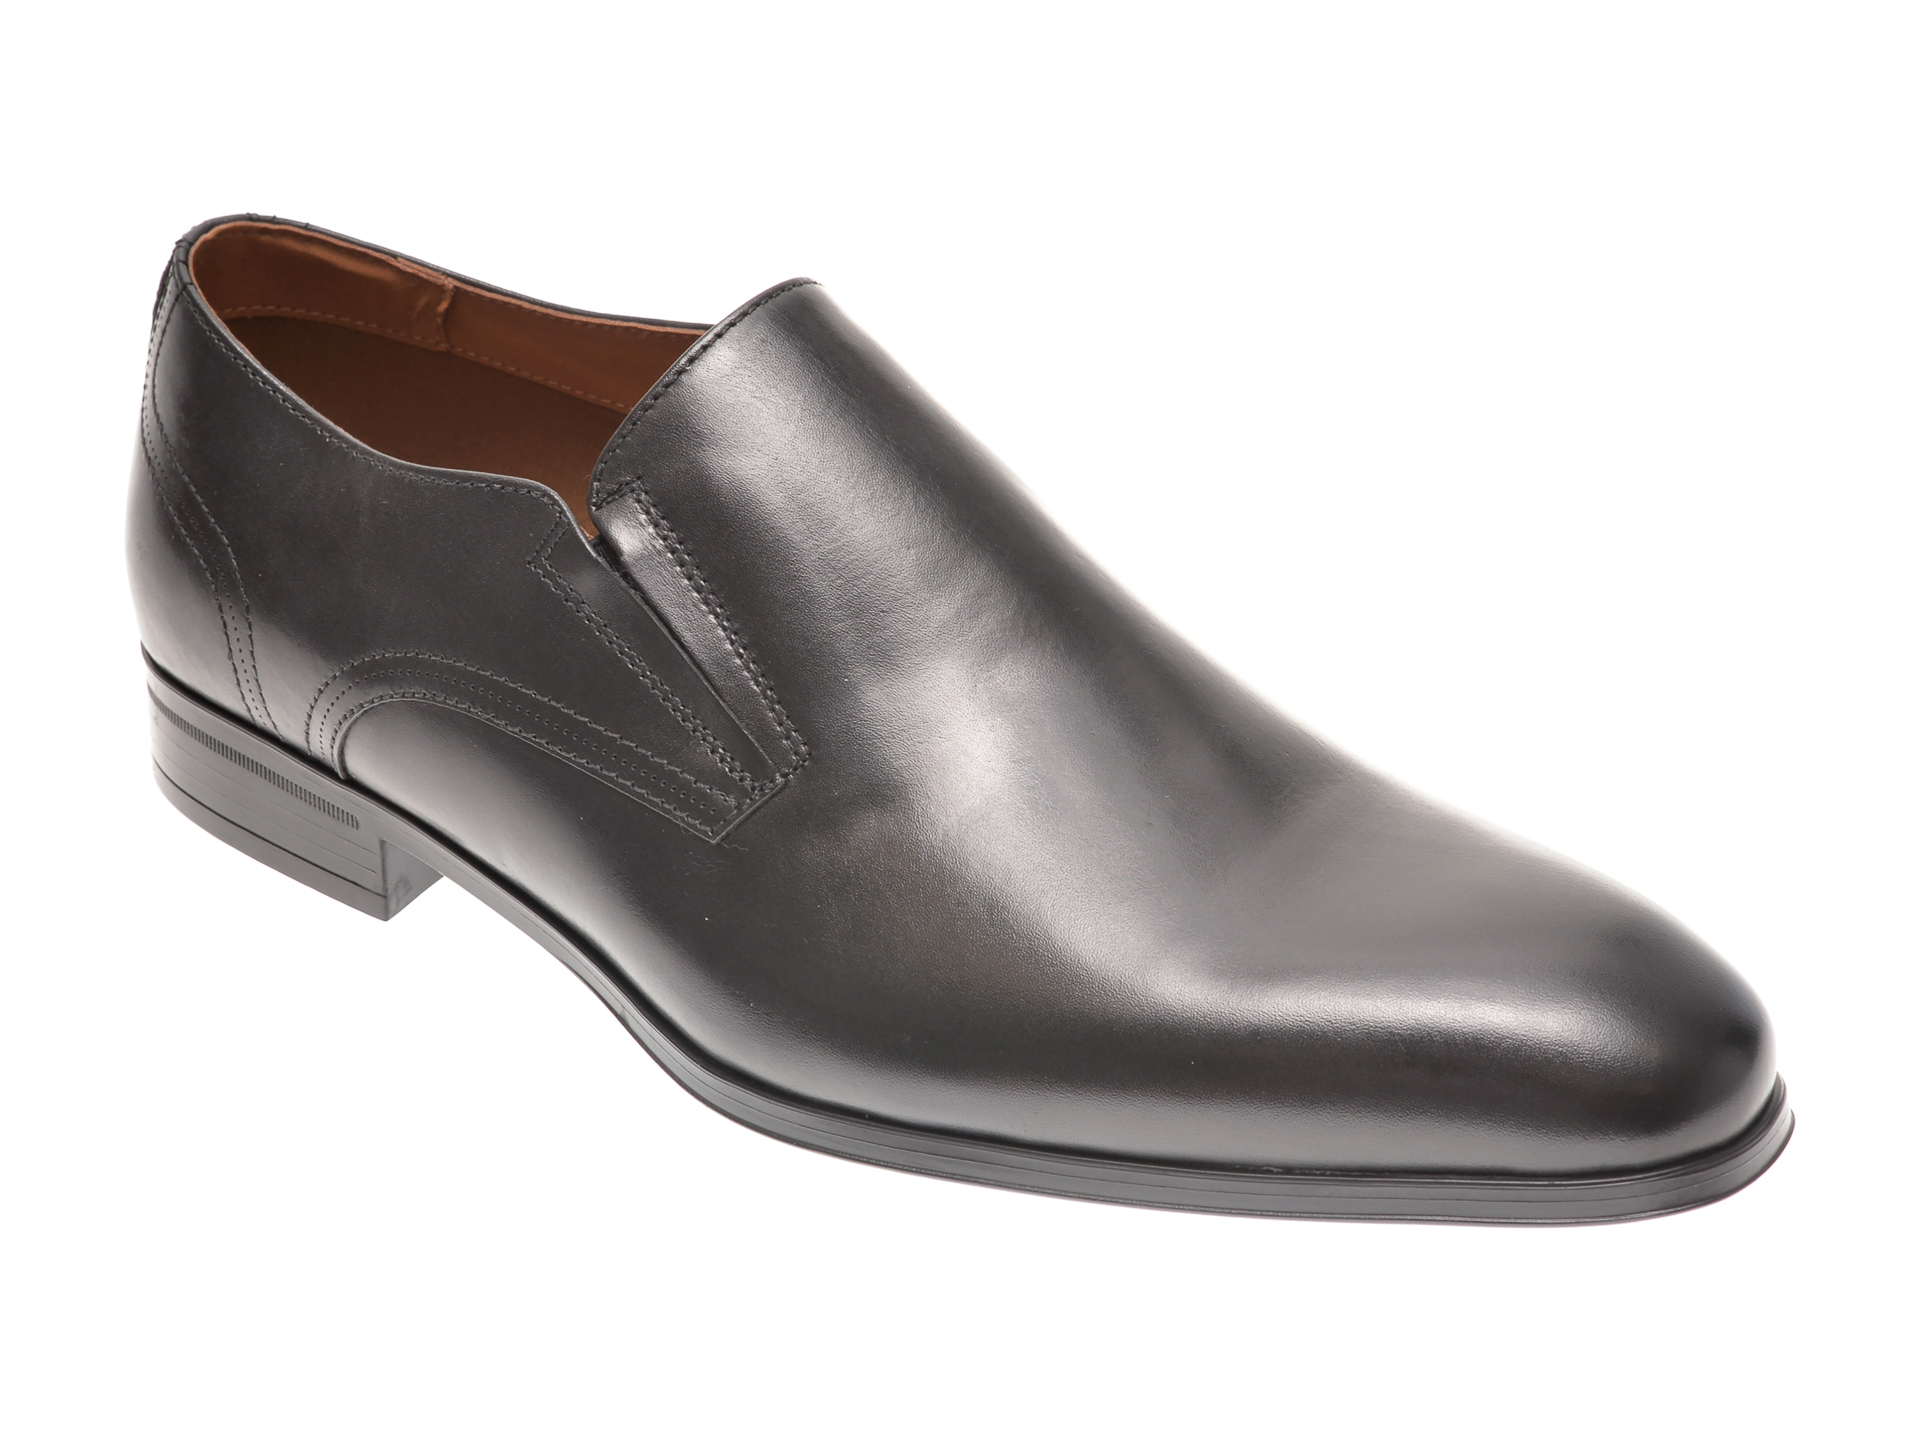 Pantofi ALDO negri, Hyogo001, din piele naturala imagine otter.ro 2021